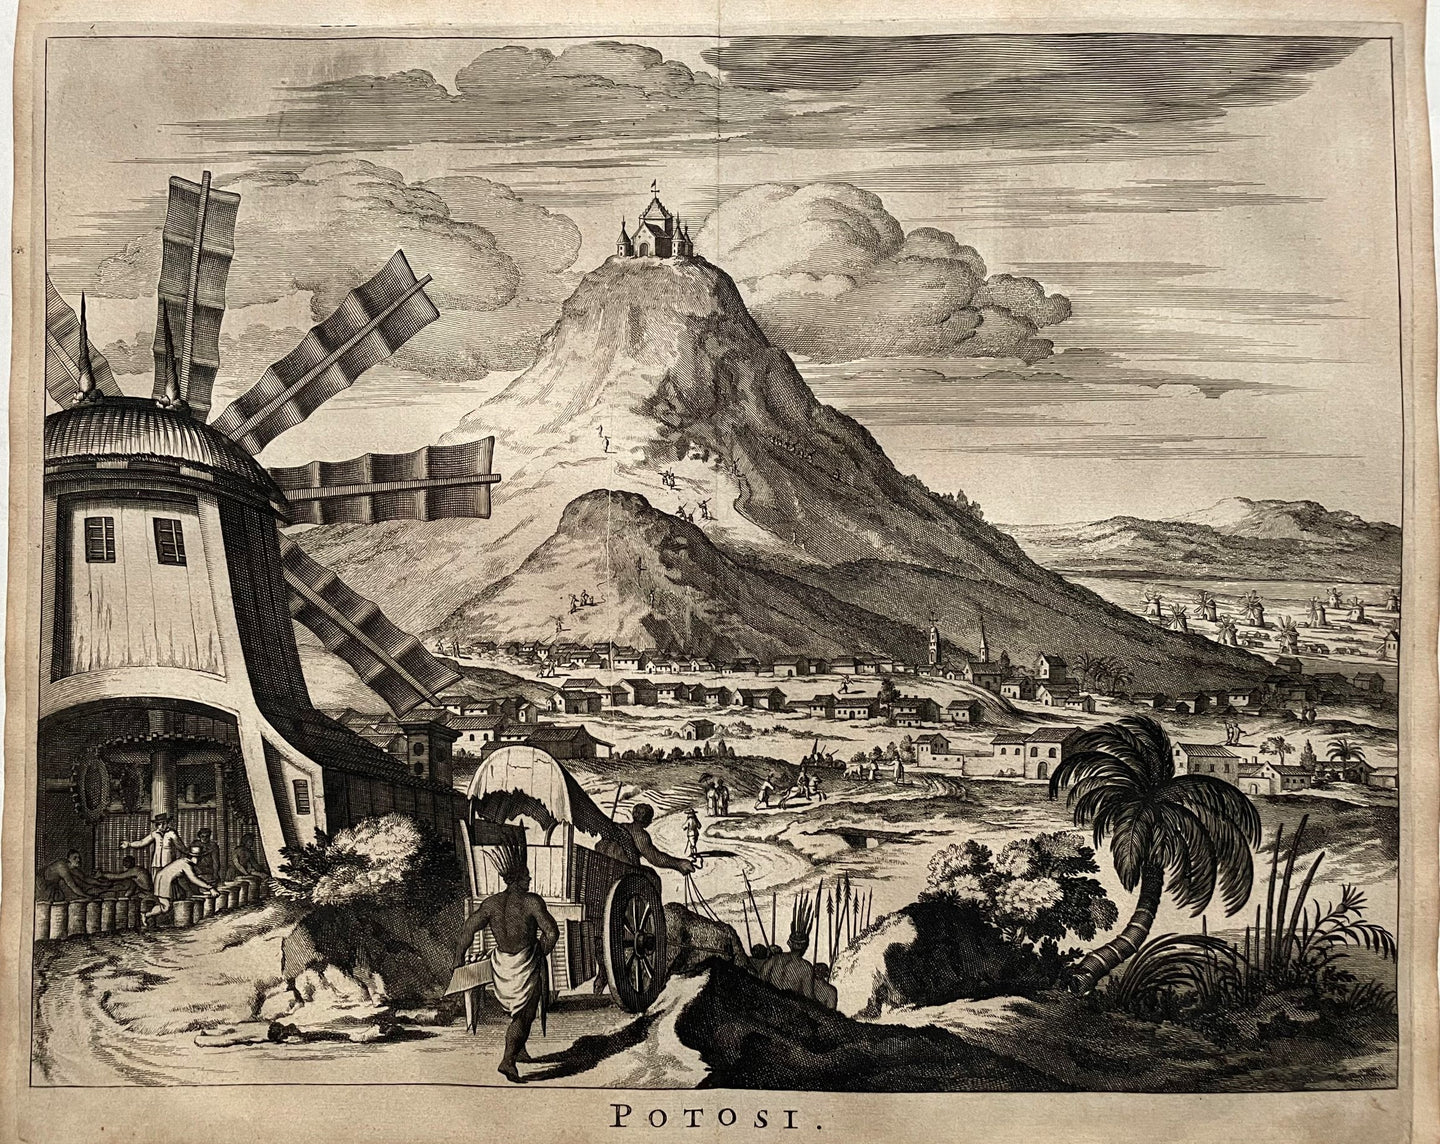 Bolivia Potosi - A Montanus - 1671